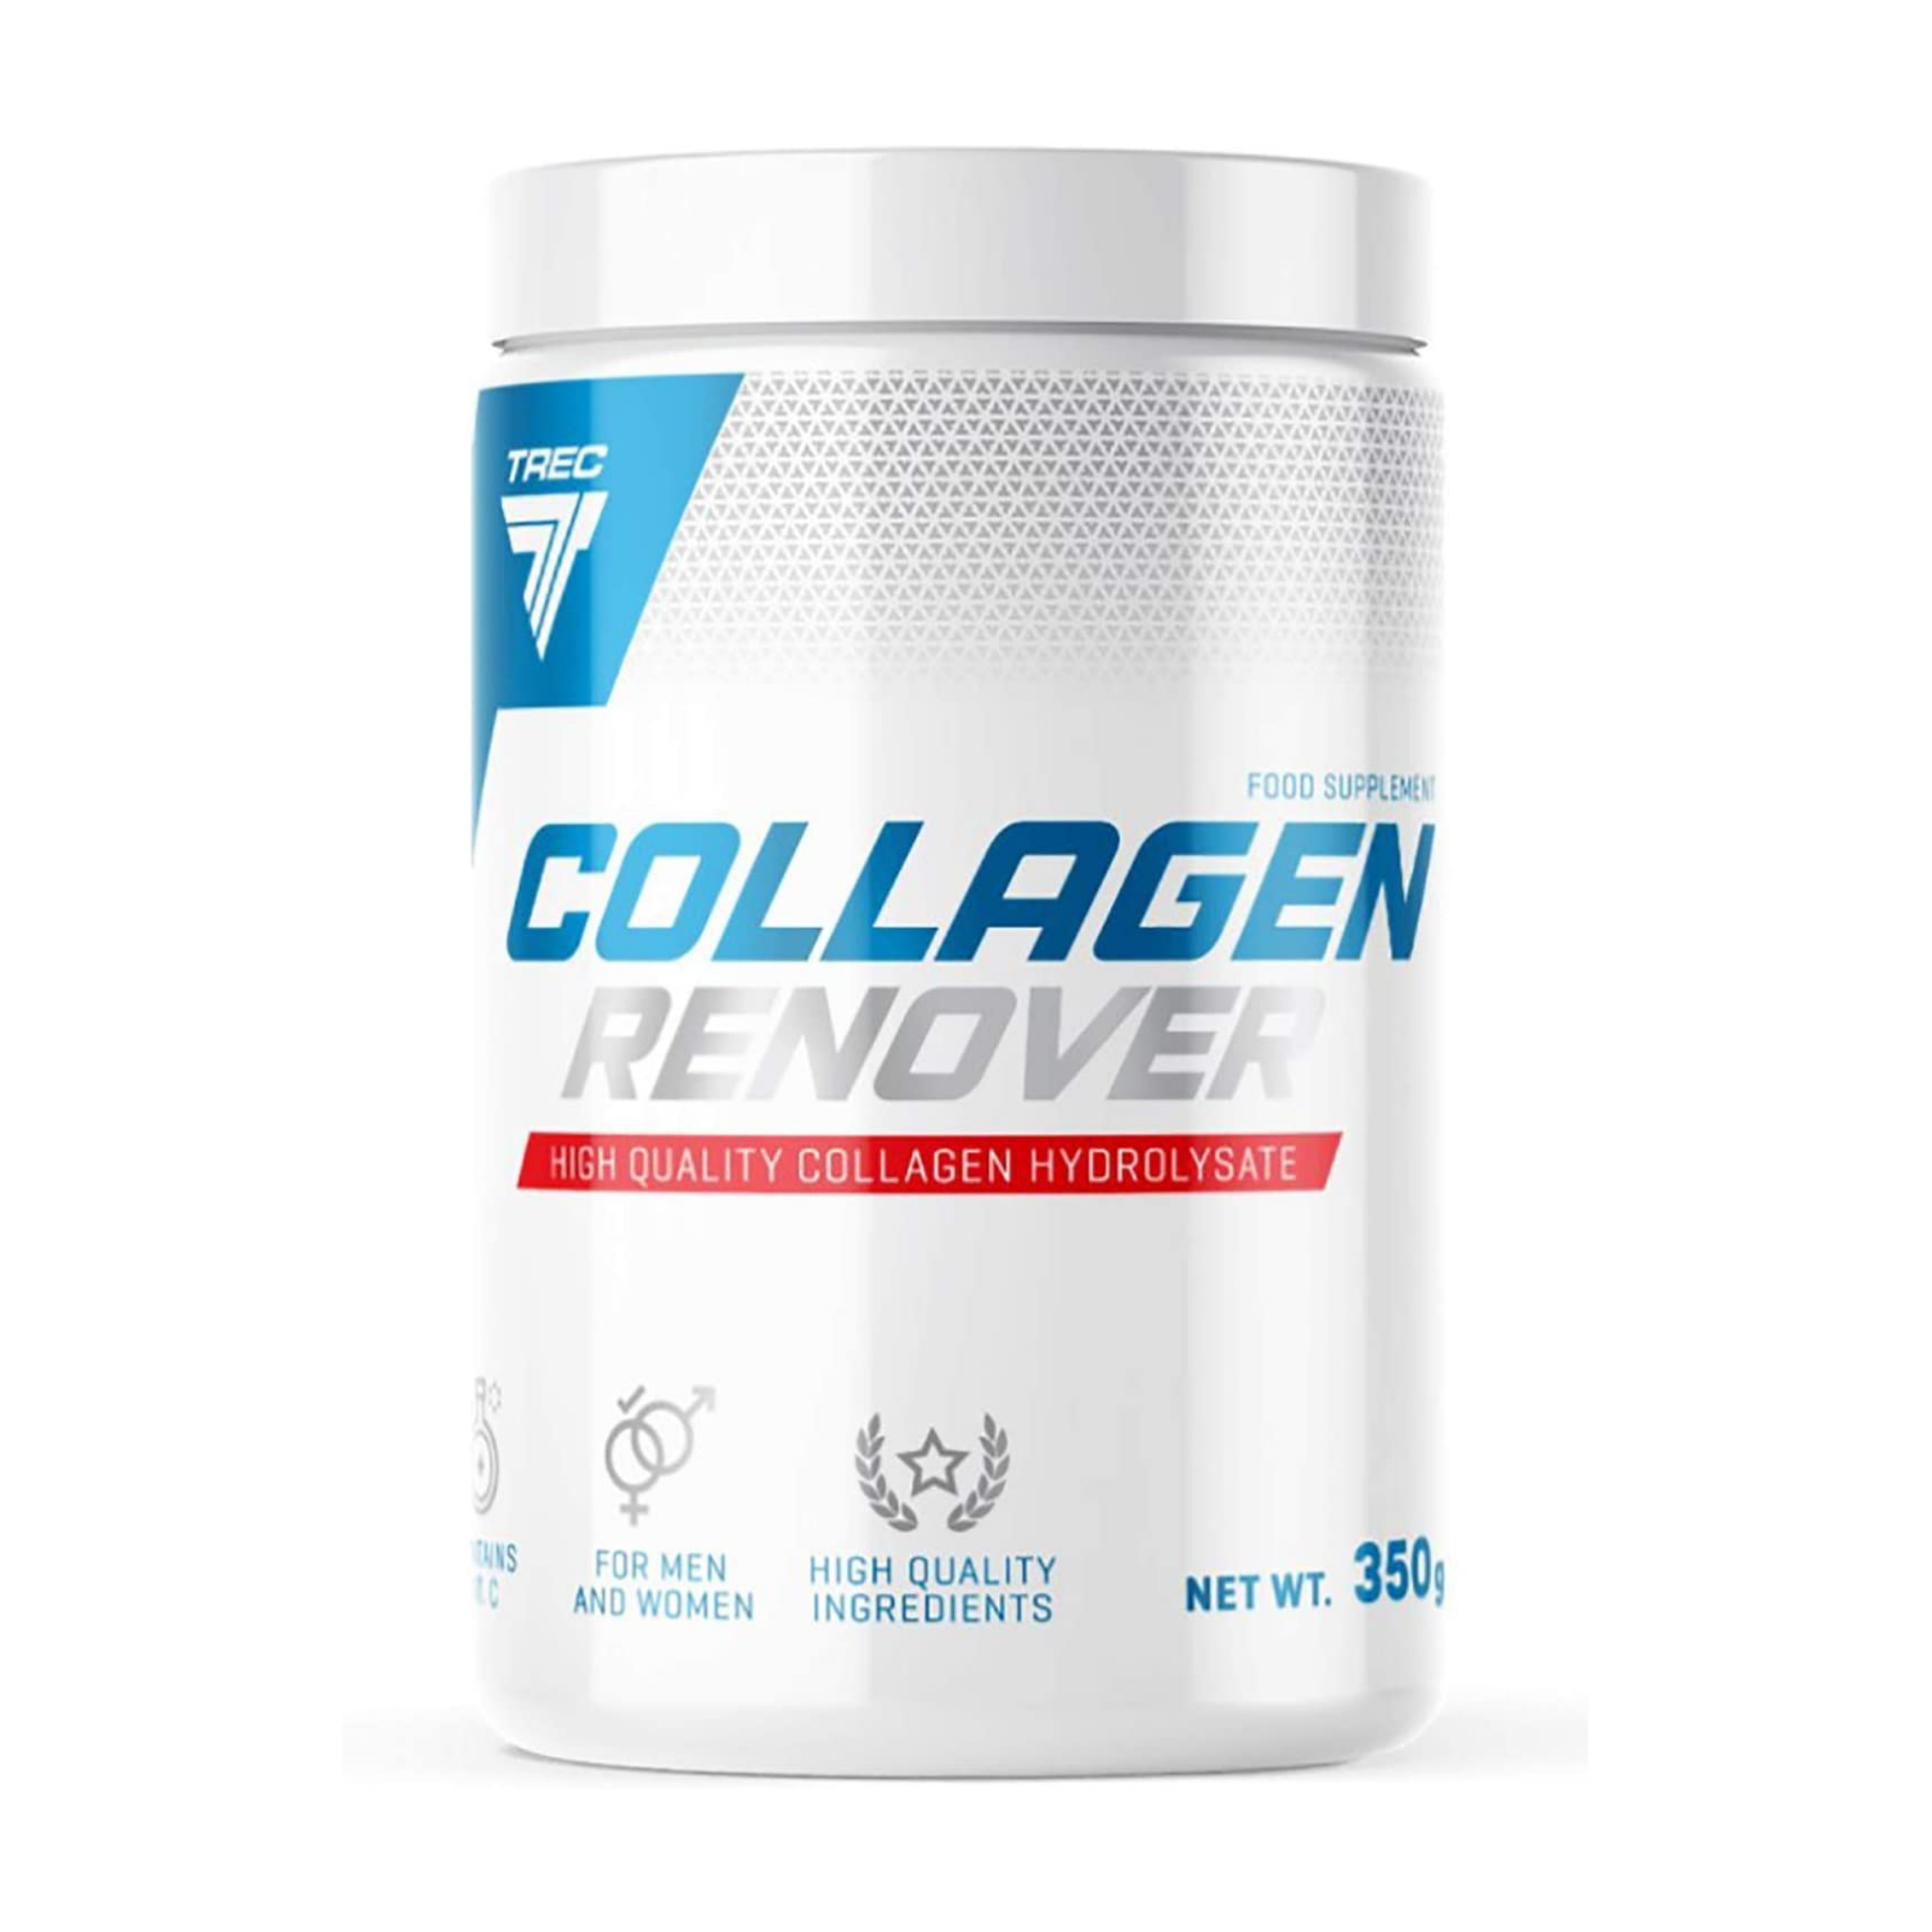 Trec Nutrition Collagen Renover